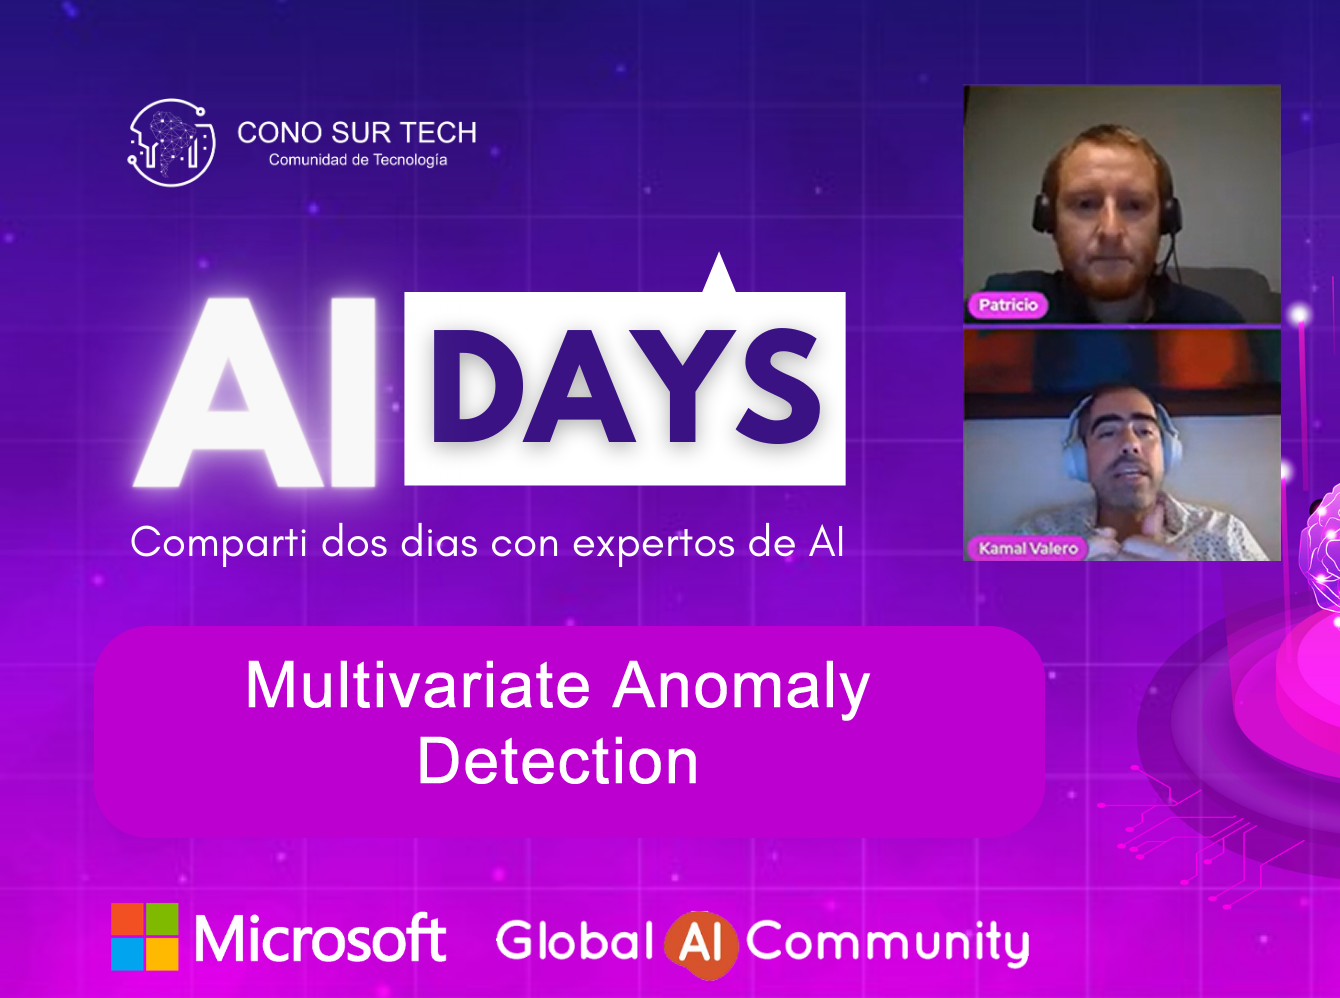 AI Days 2021 - Kamal Valero y Patricio Cofre